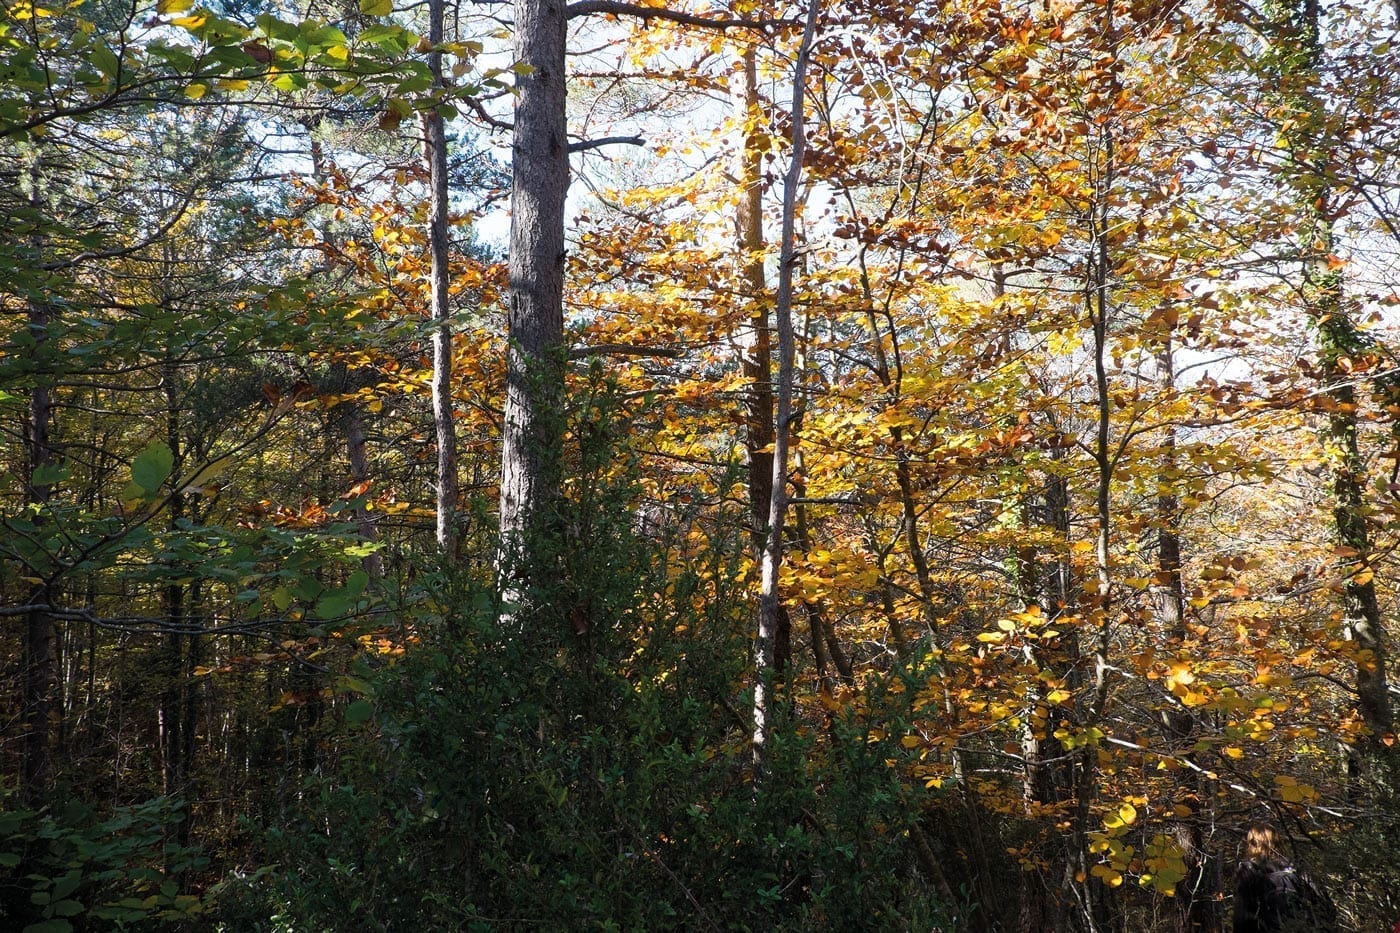 Wanderlust, Wald, Herbst, November, Naturliebe, Natur. Der Herbst ist da!